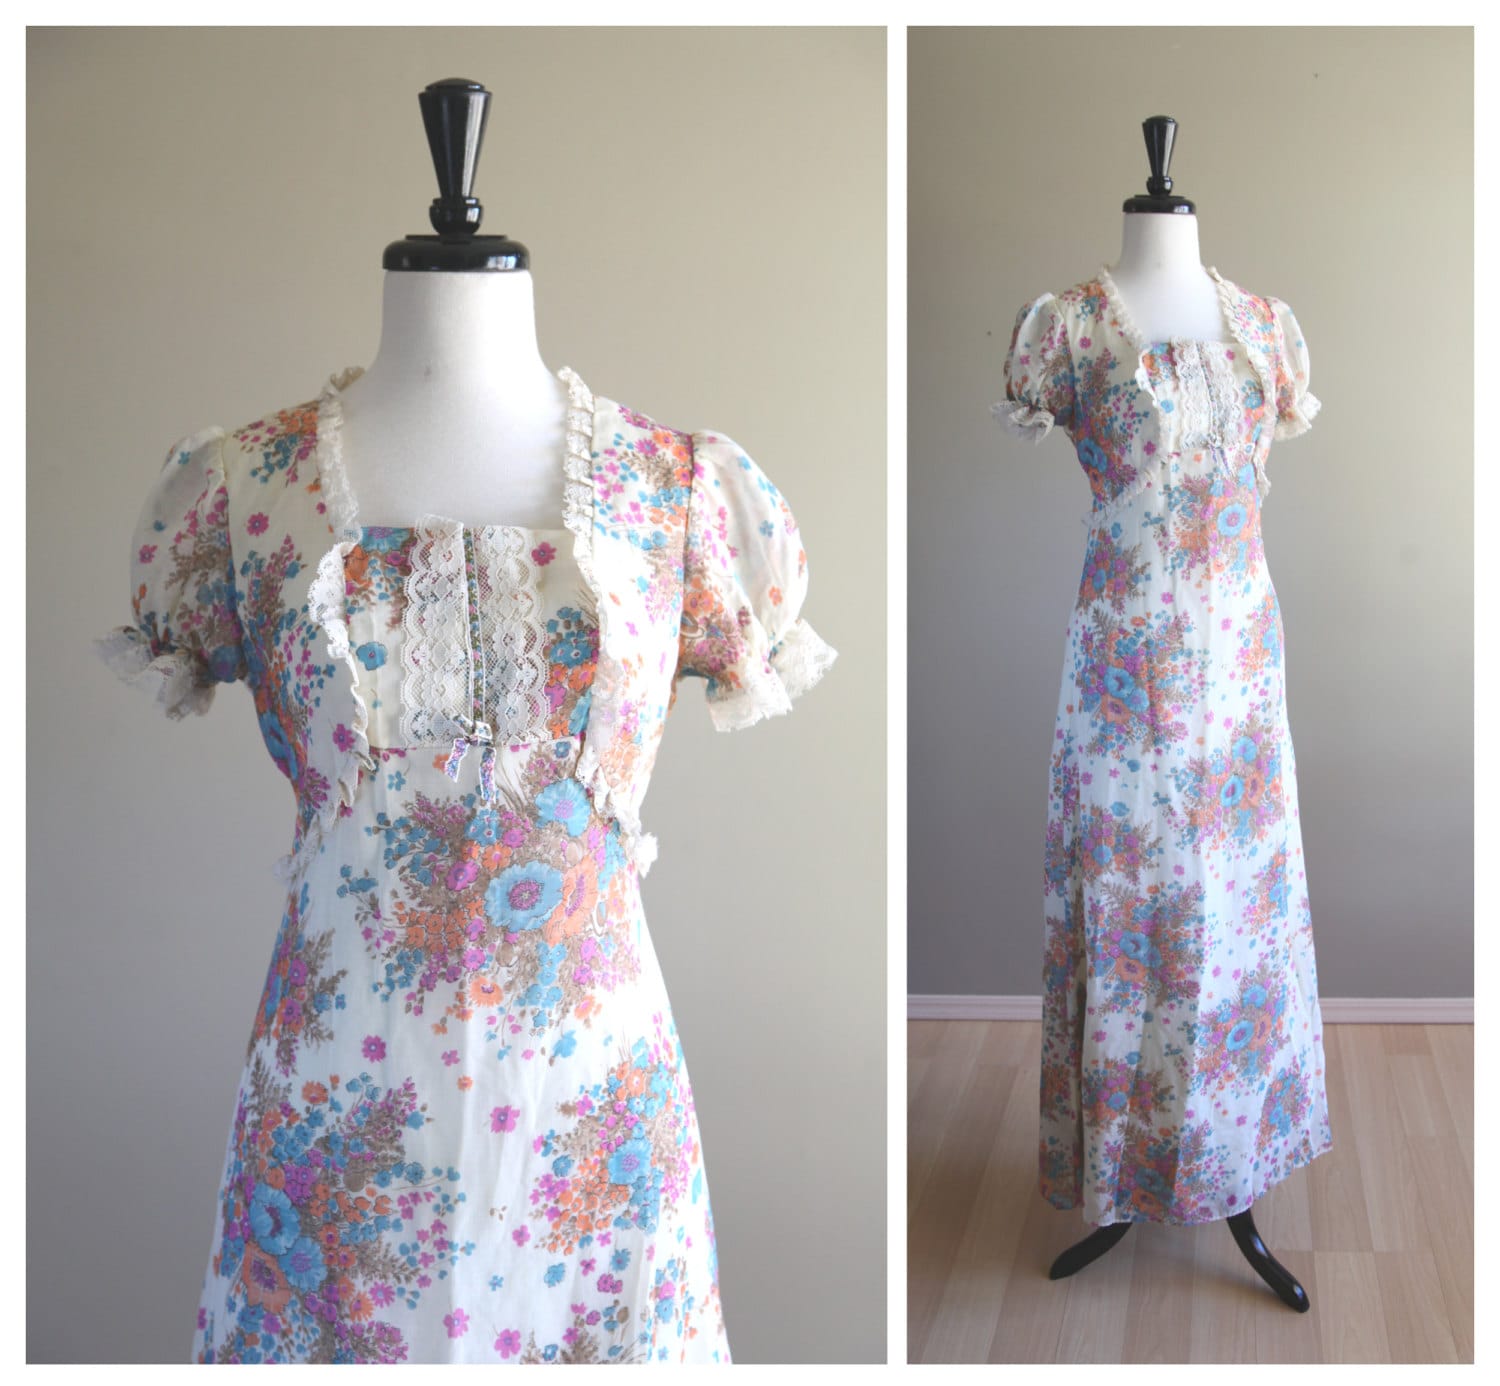 Floral Empire Waist Full Length Vintage Prairie Dress w/ Sheer